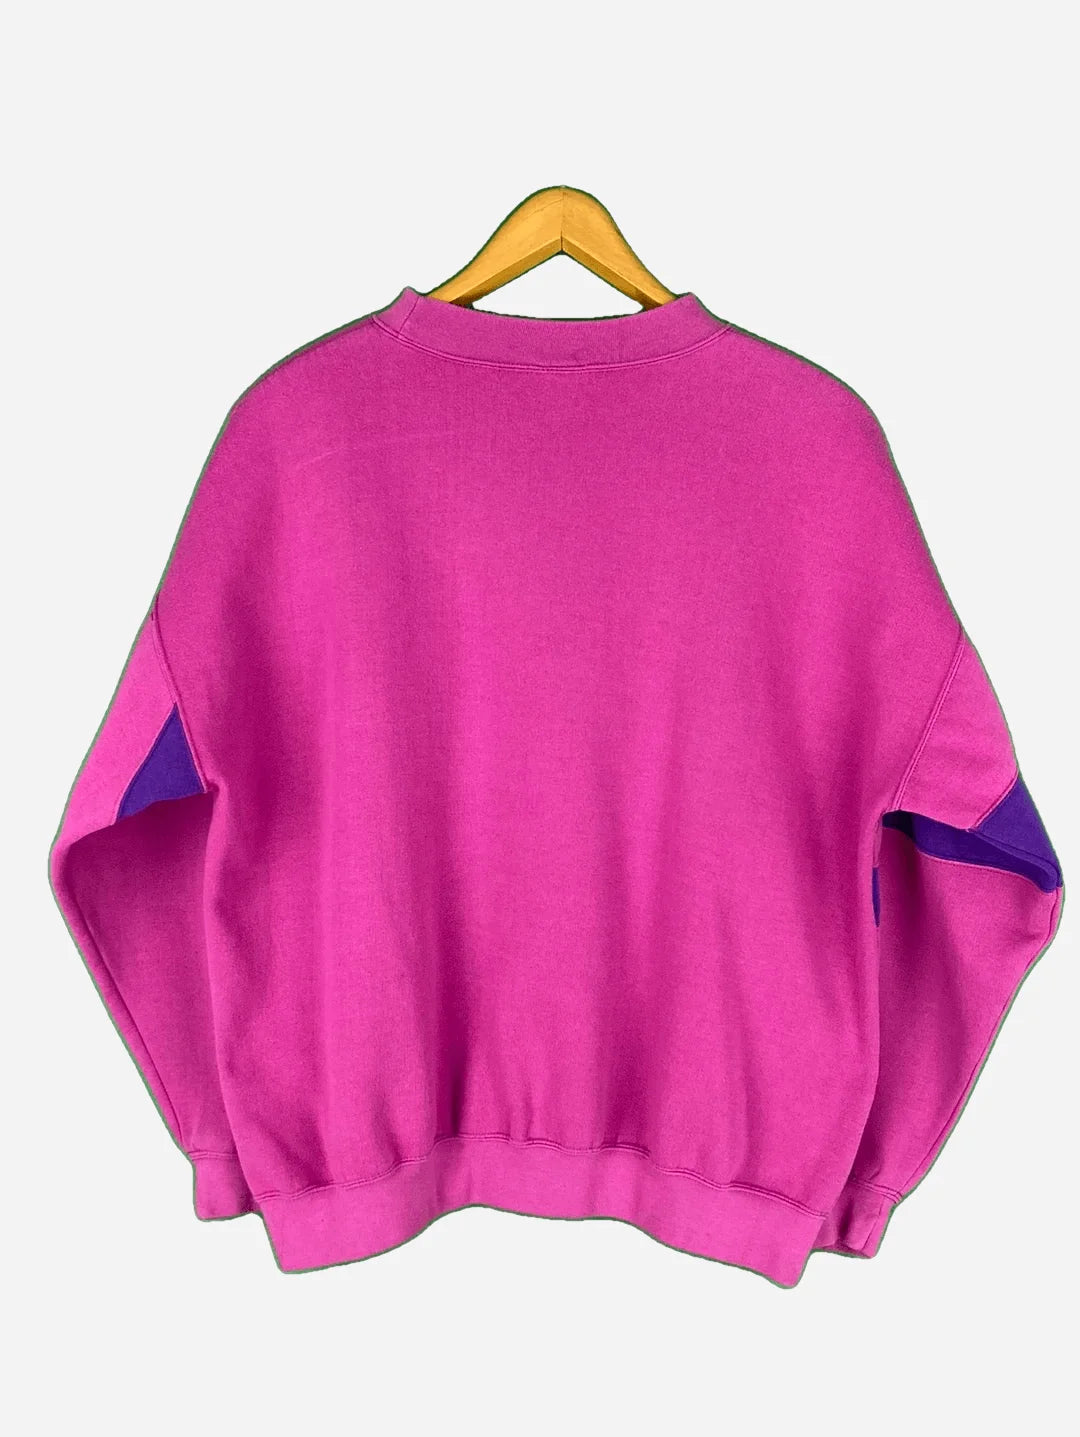 C&A Sweater (S)